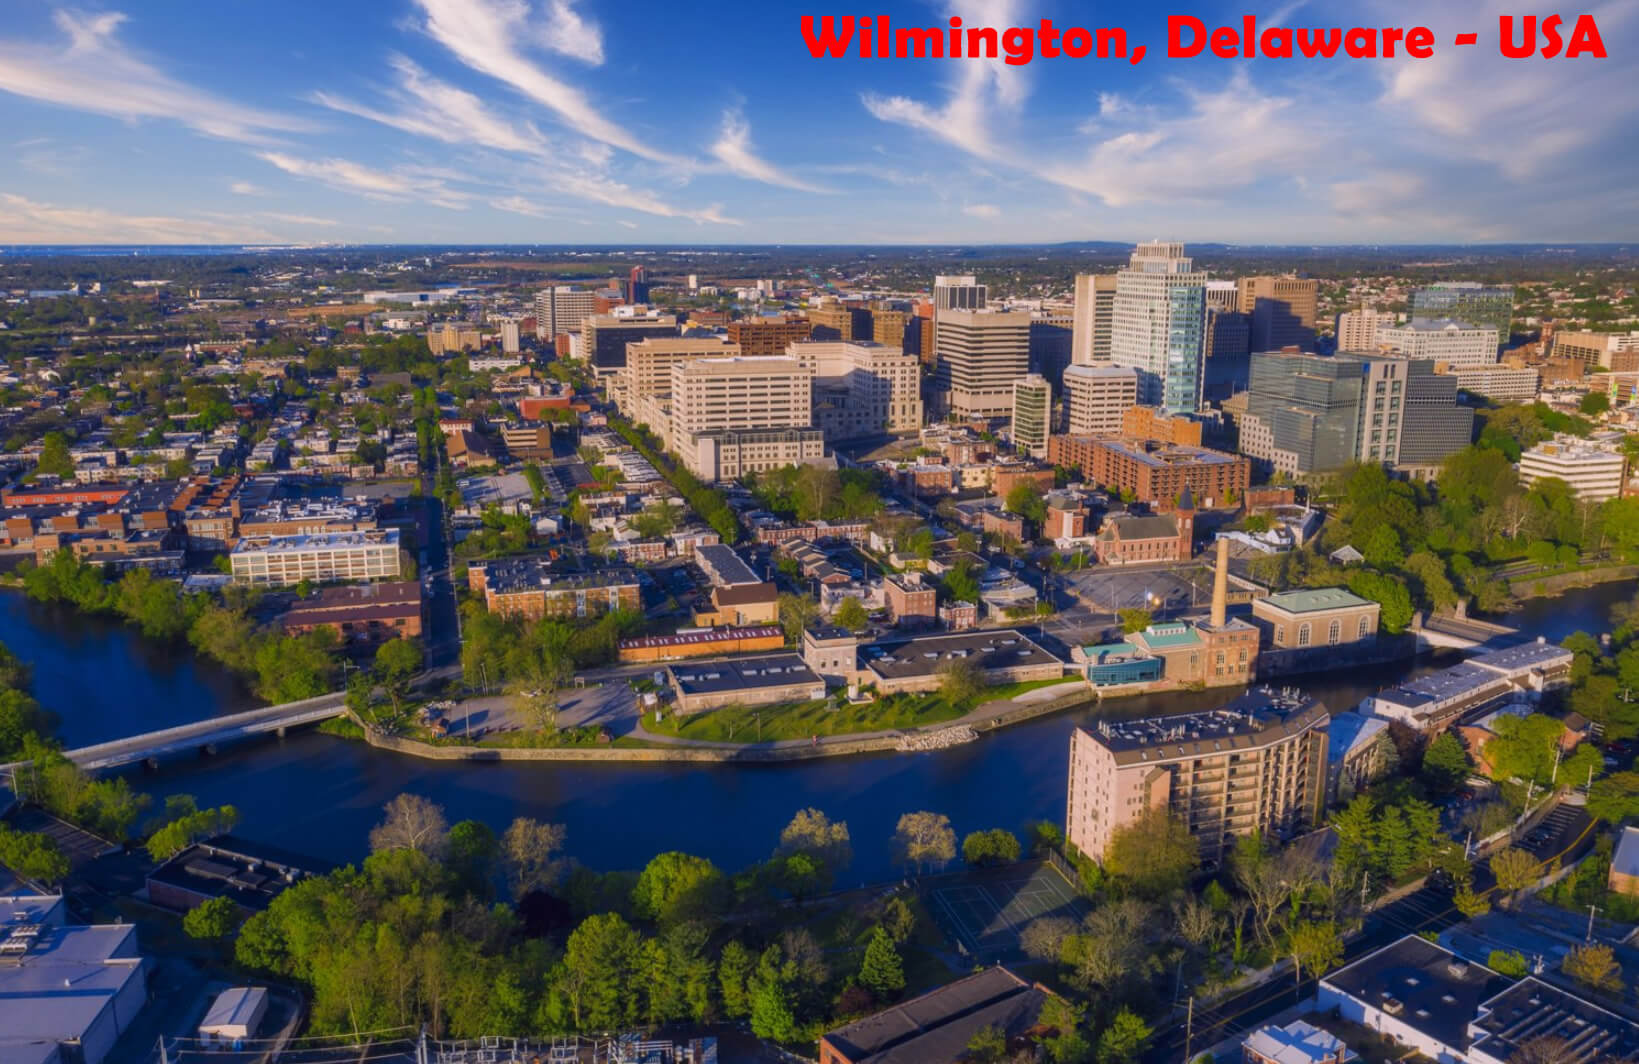 Wilmington Delaware United States of America